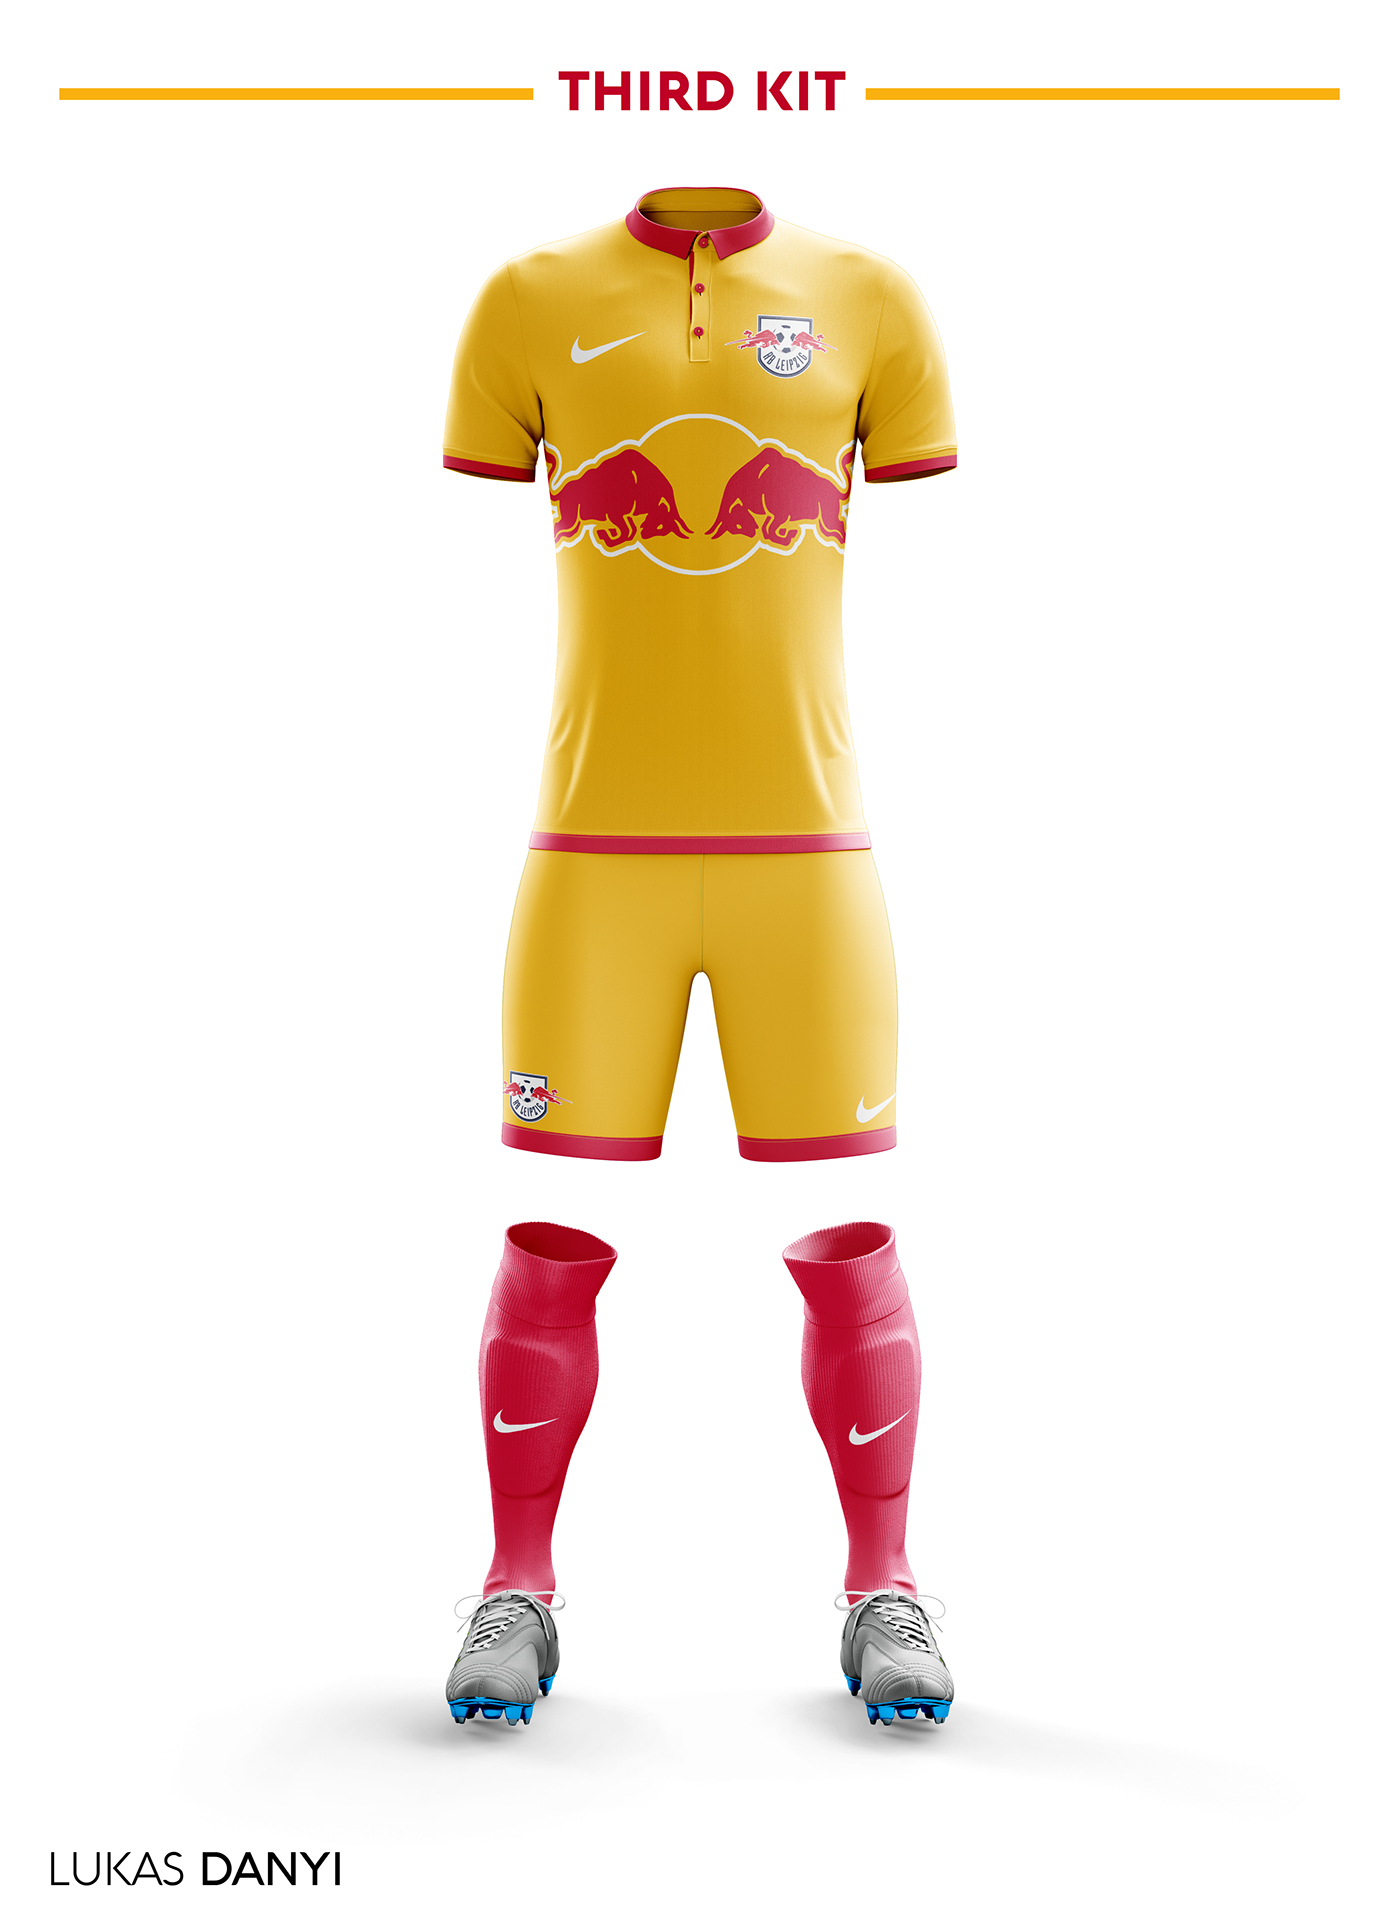 football kit soccer germany bundesliga RedBull Nike shirt fantasy kit